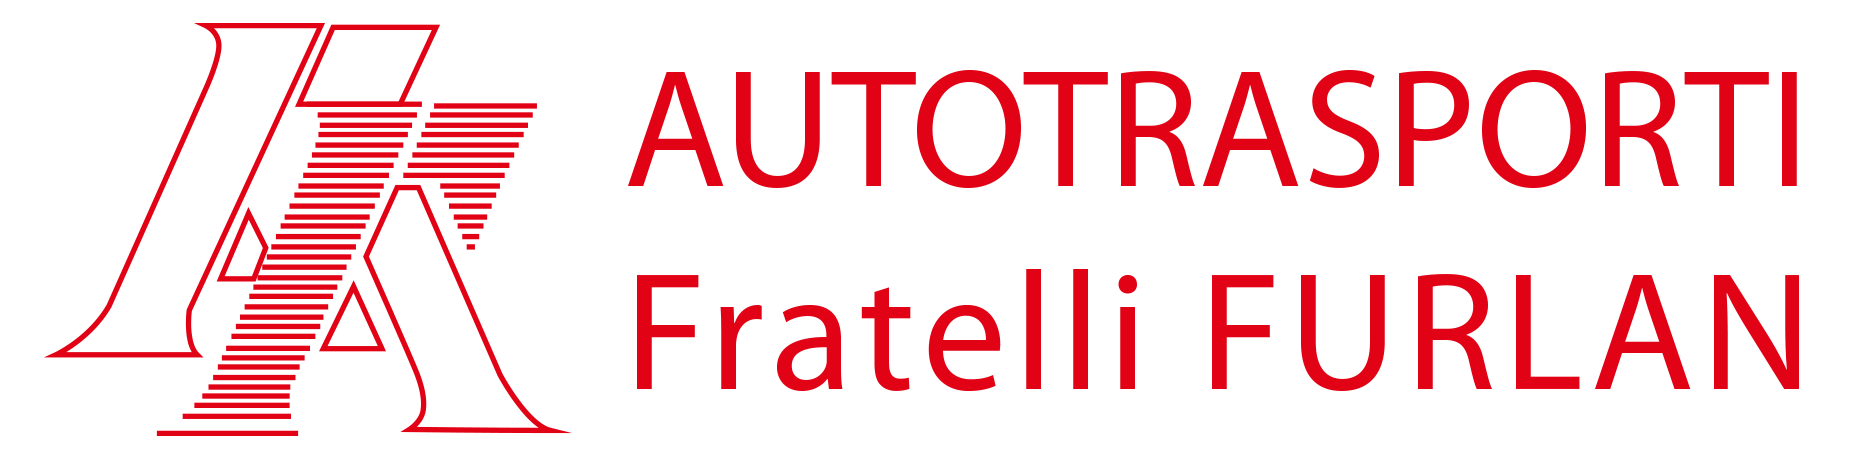 Autotrasporti Fratelli Furlan - Logo